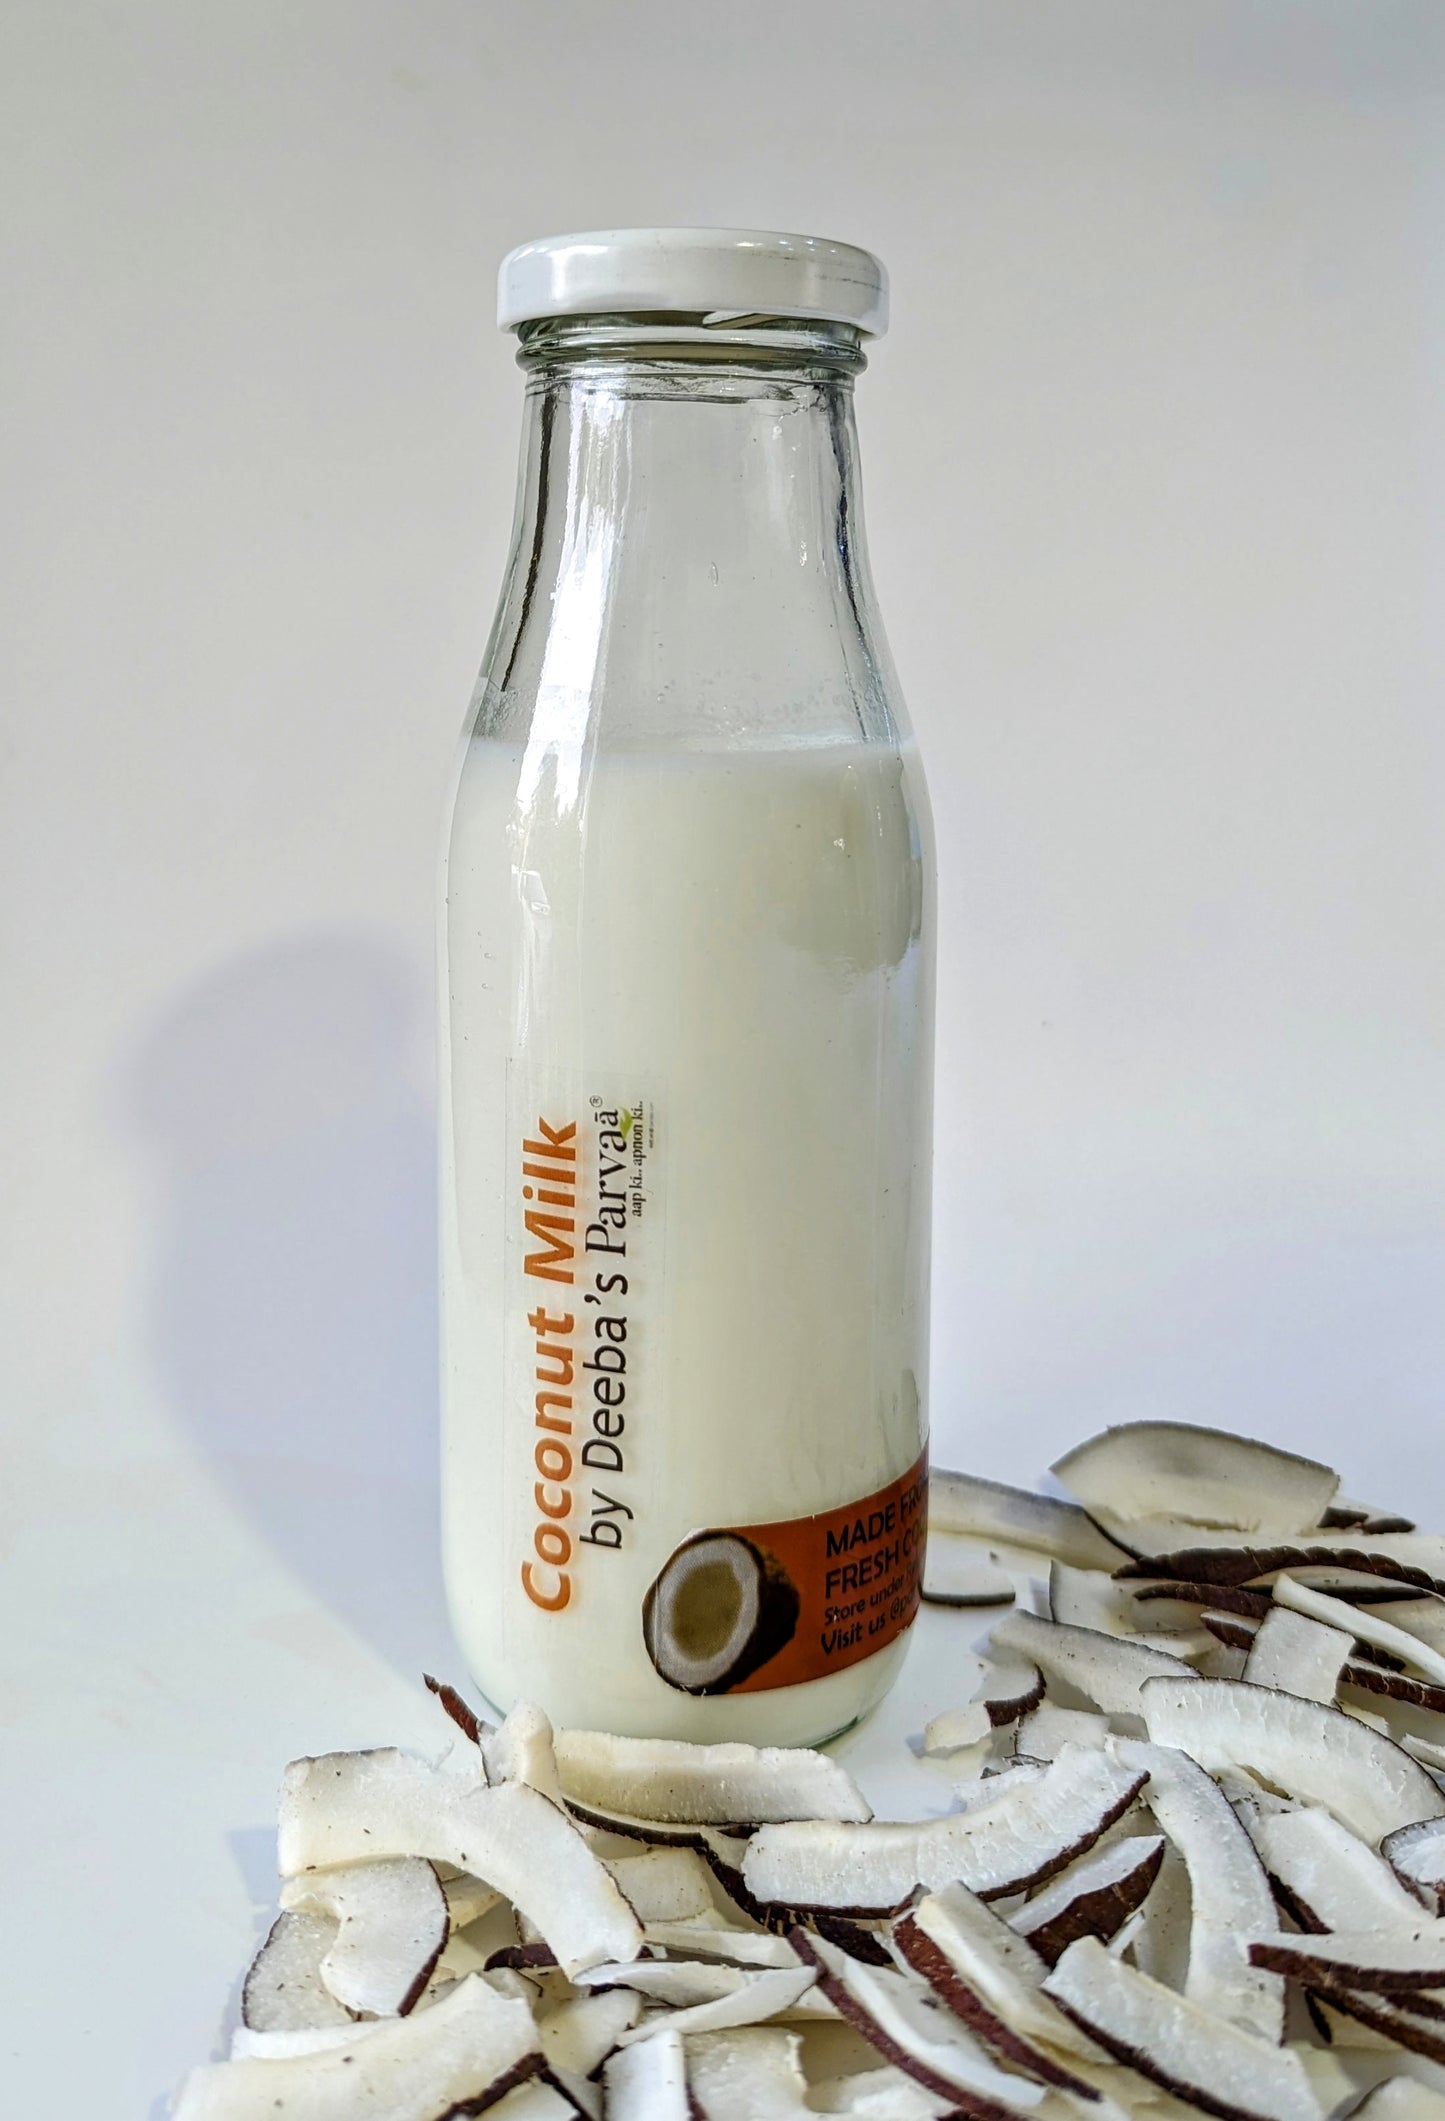 Deeba's Virgin Coconut Milk